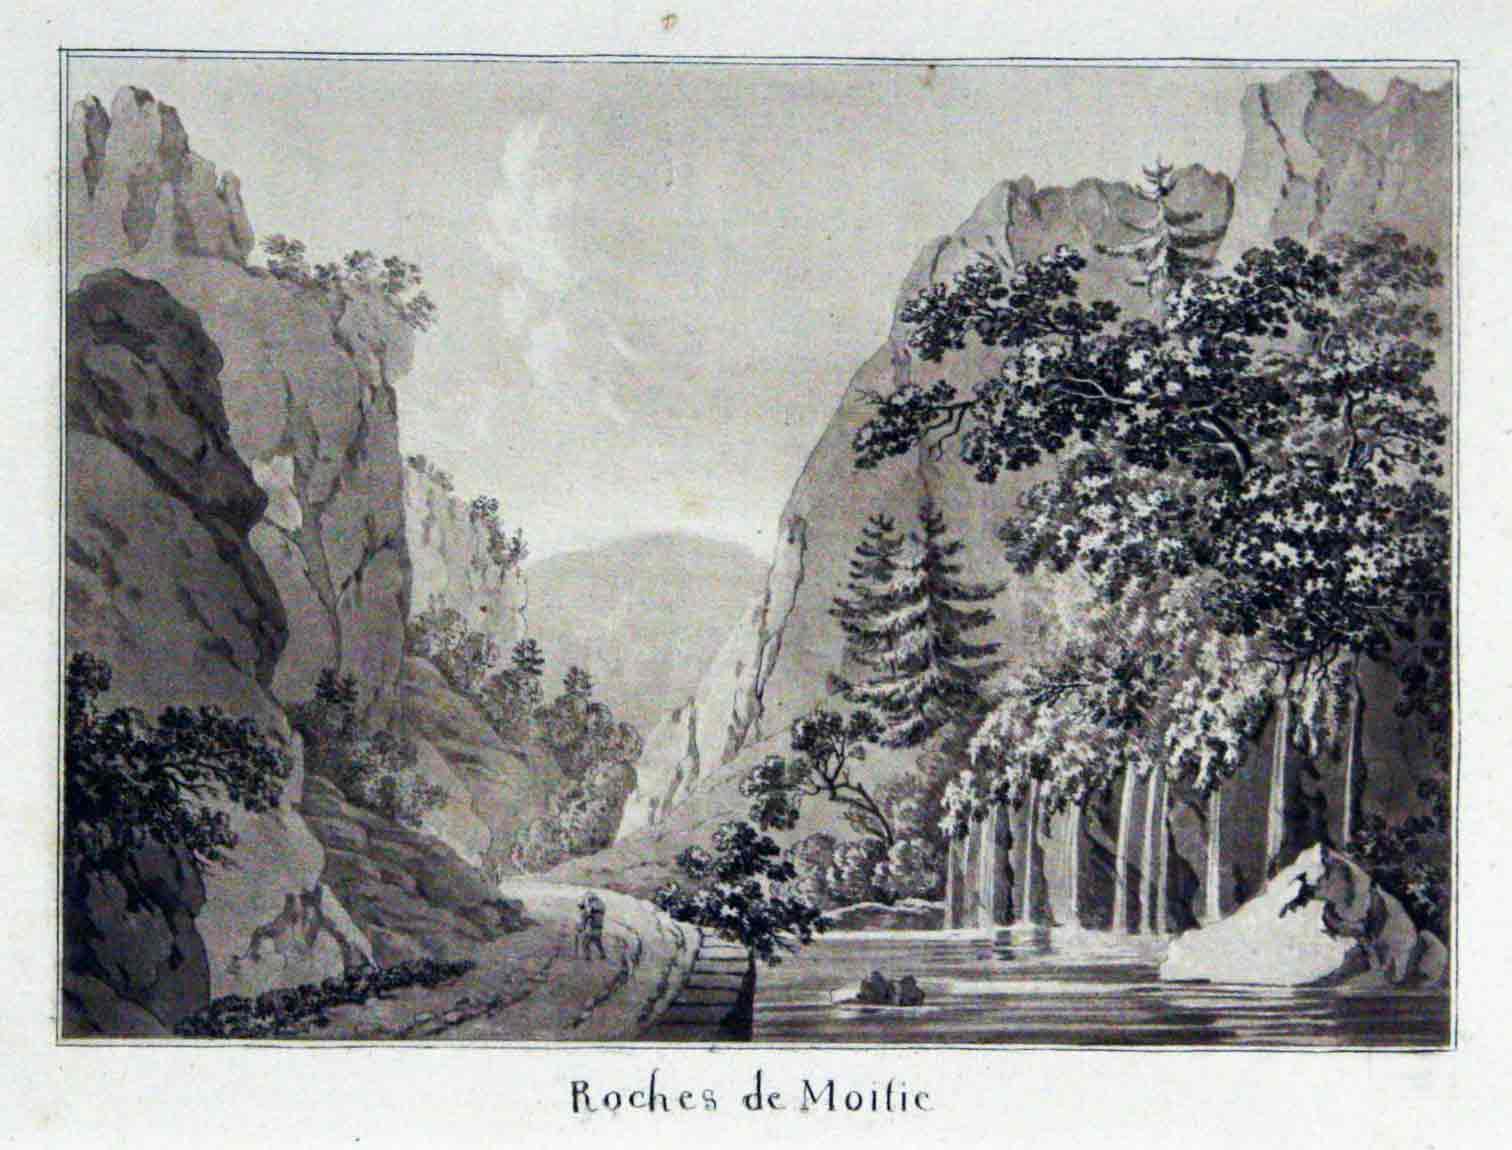 BIRMANN, Pierre (1758-1844) attribu : - Roches de Moiti (Moutier).